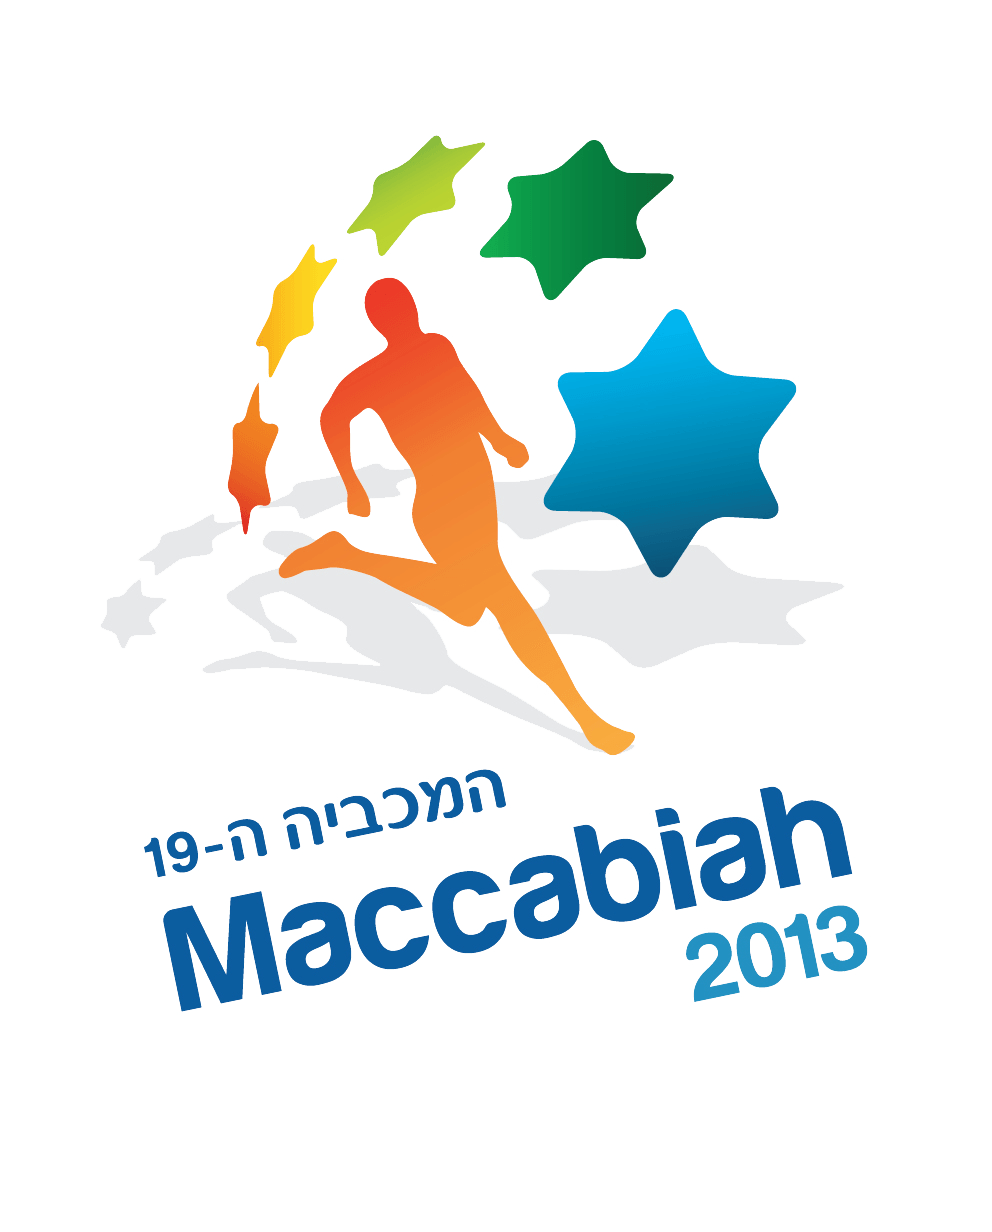 maccabiah logo